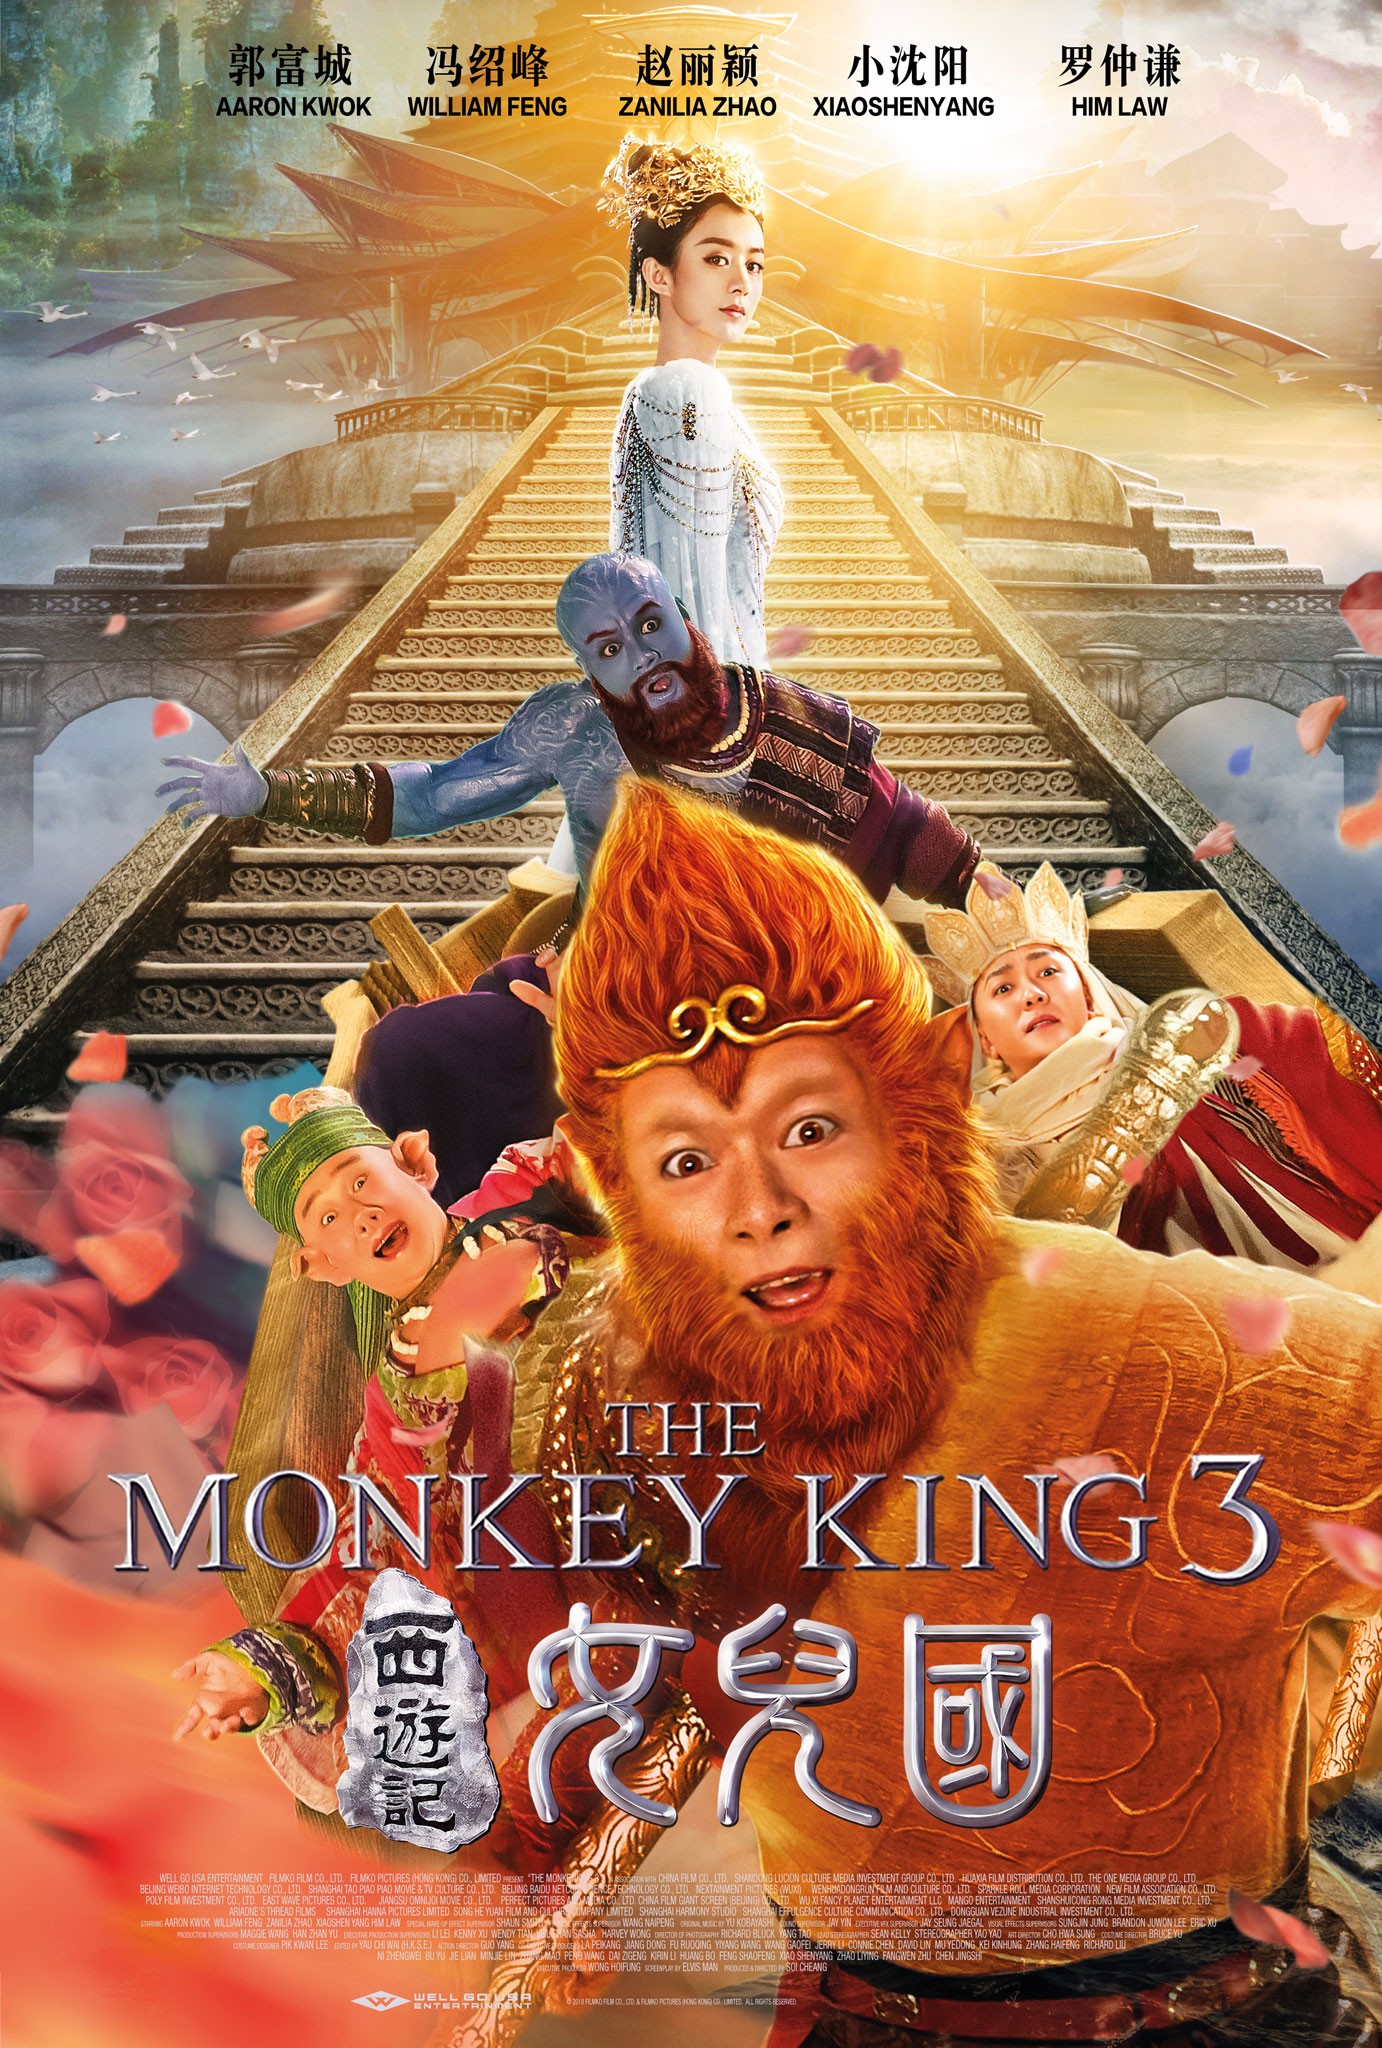 Monkey king 3 hindi dubbed download